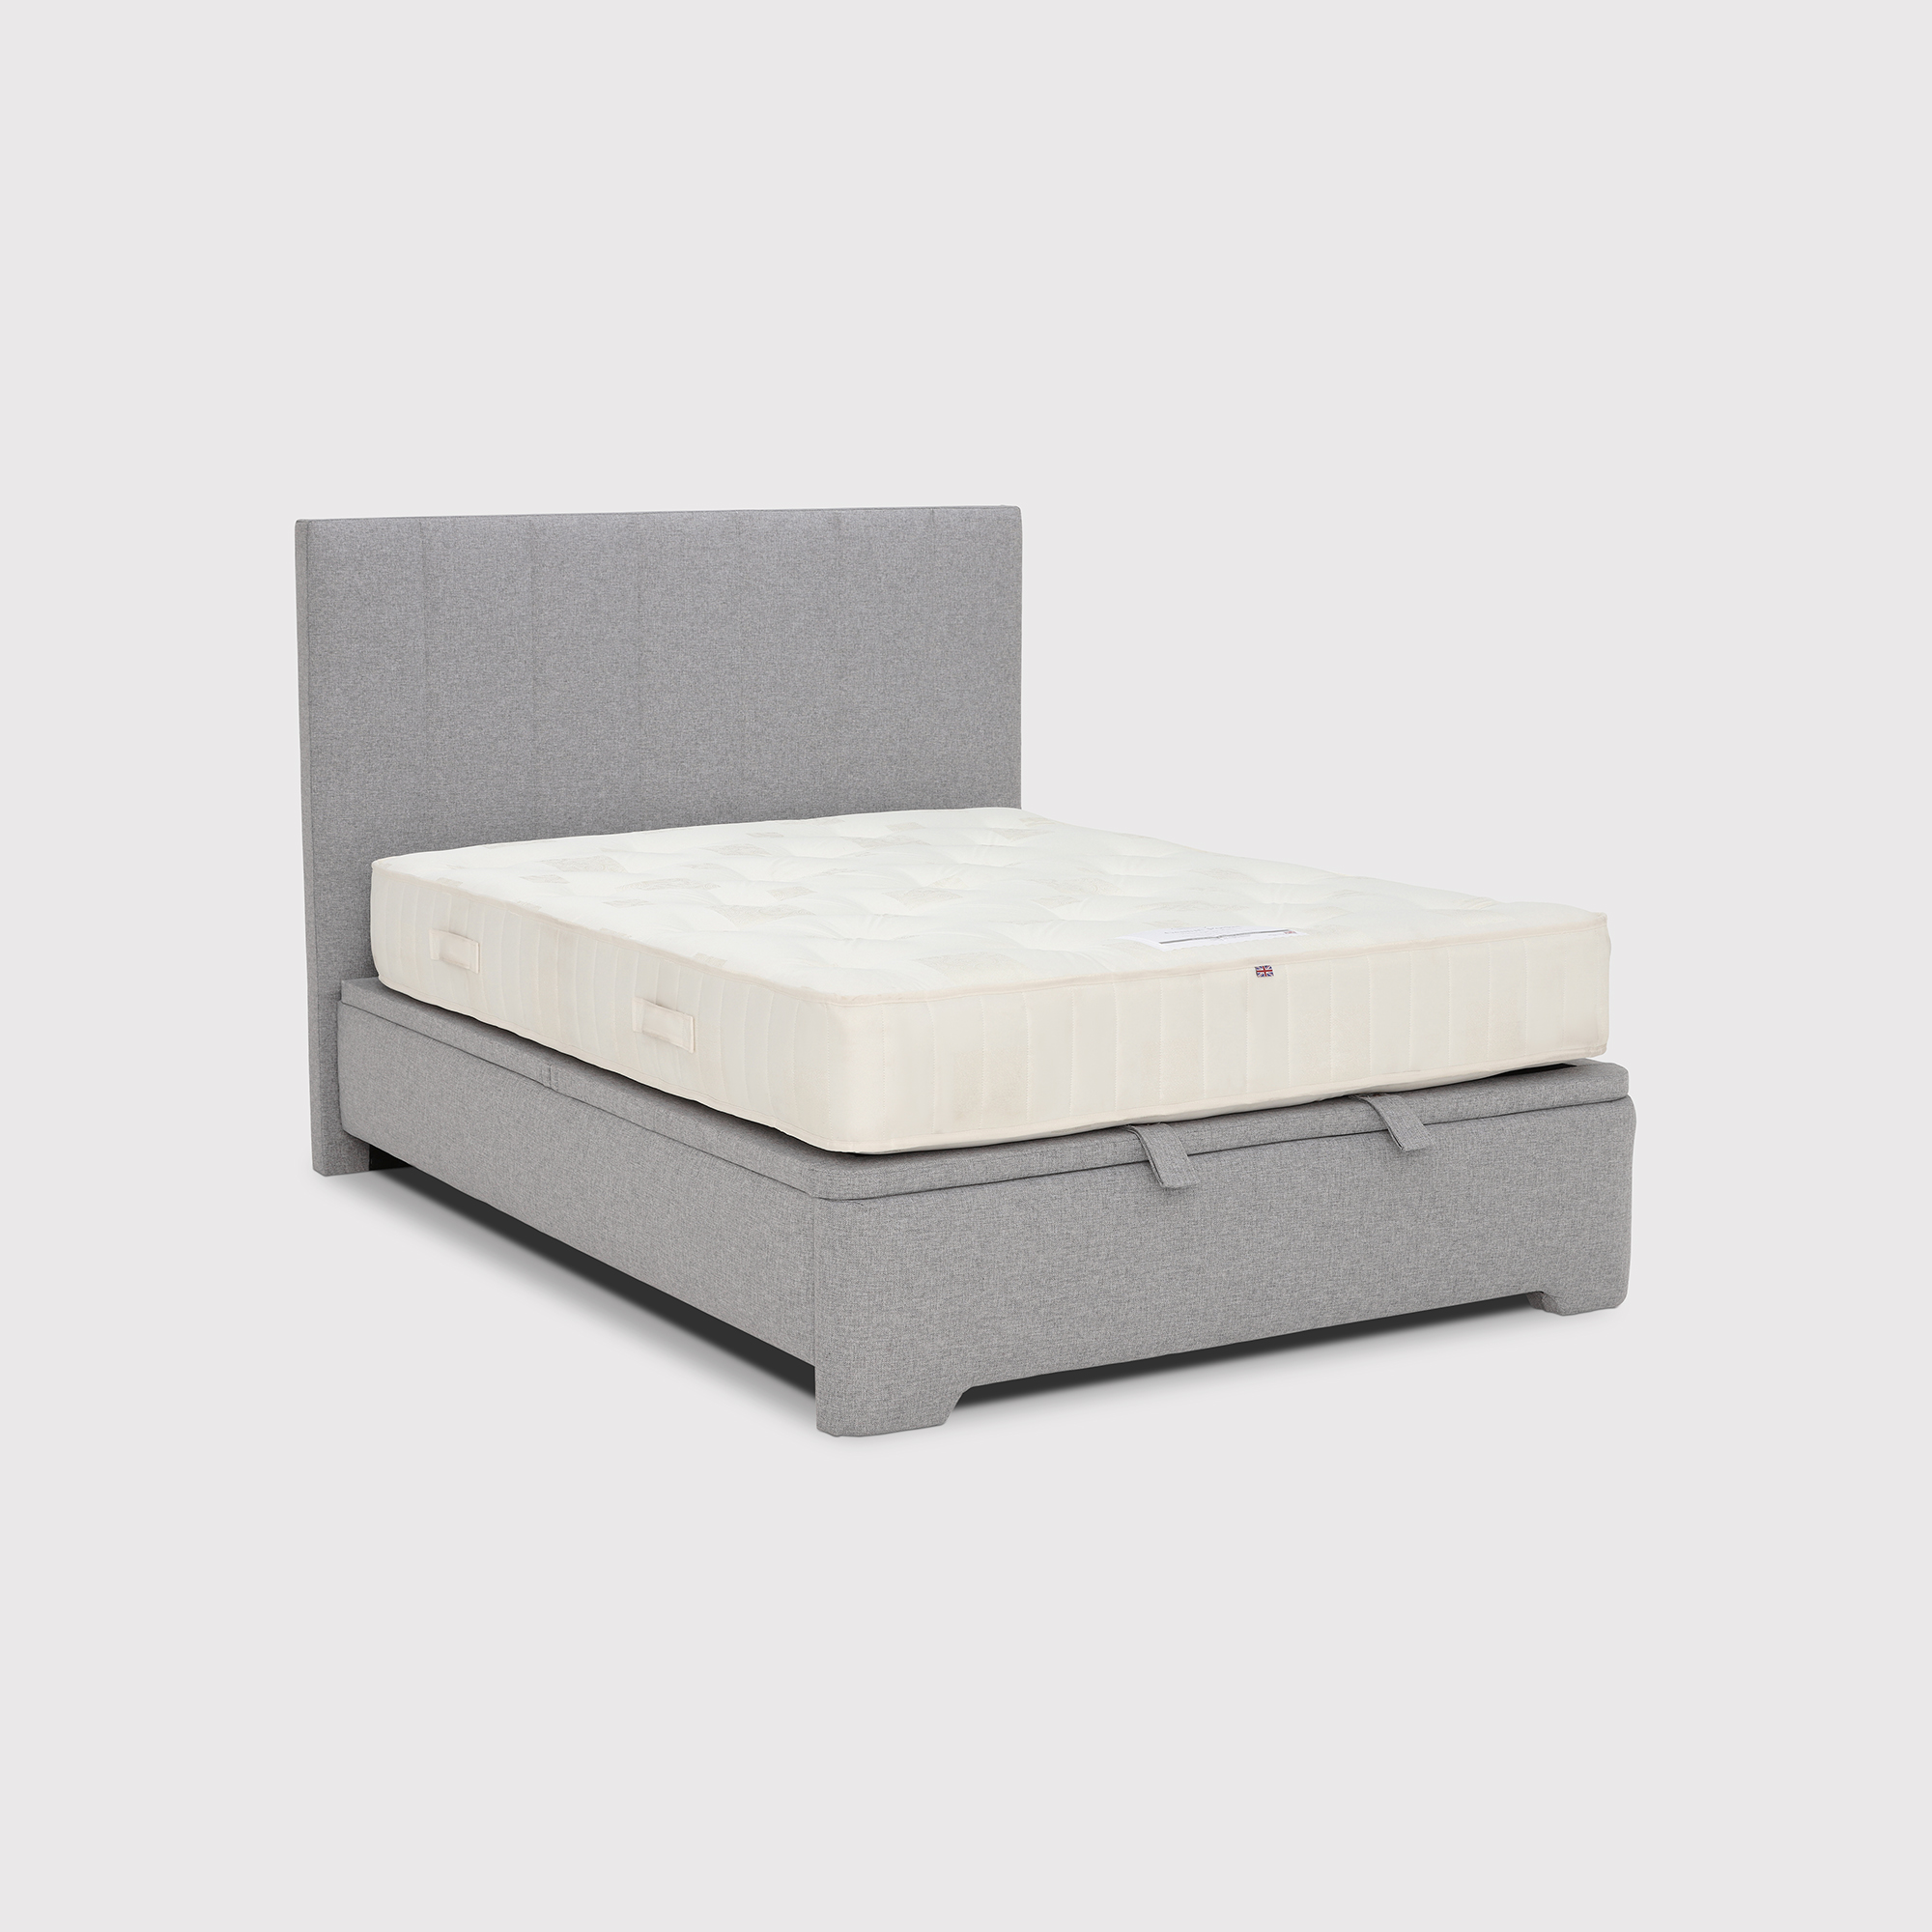 Cosima Bed Frame 150Cm, Grey | King | Barker & Stonehouse